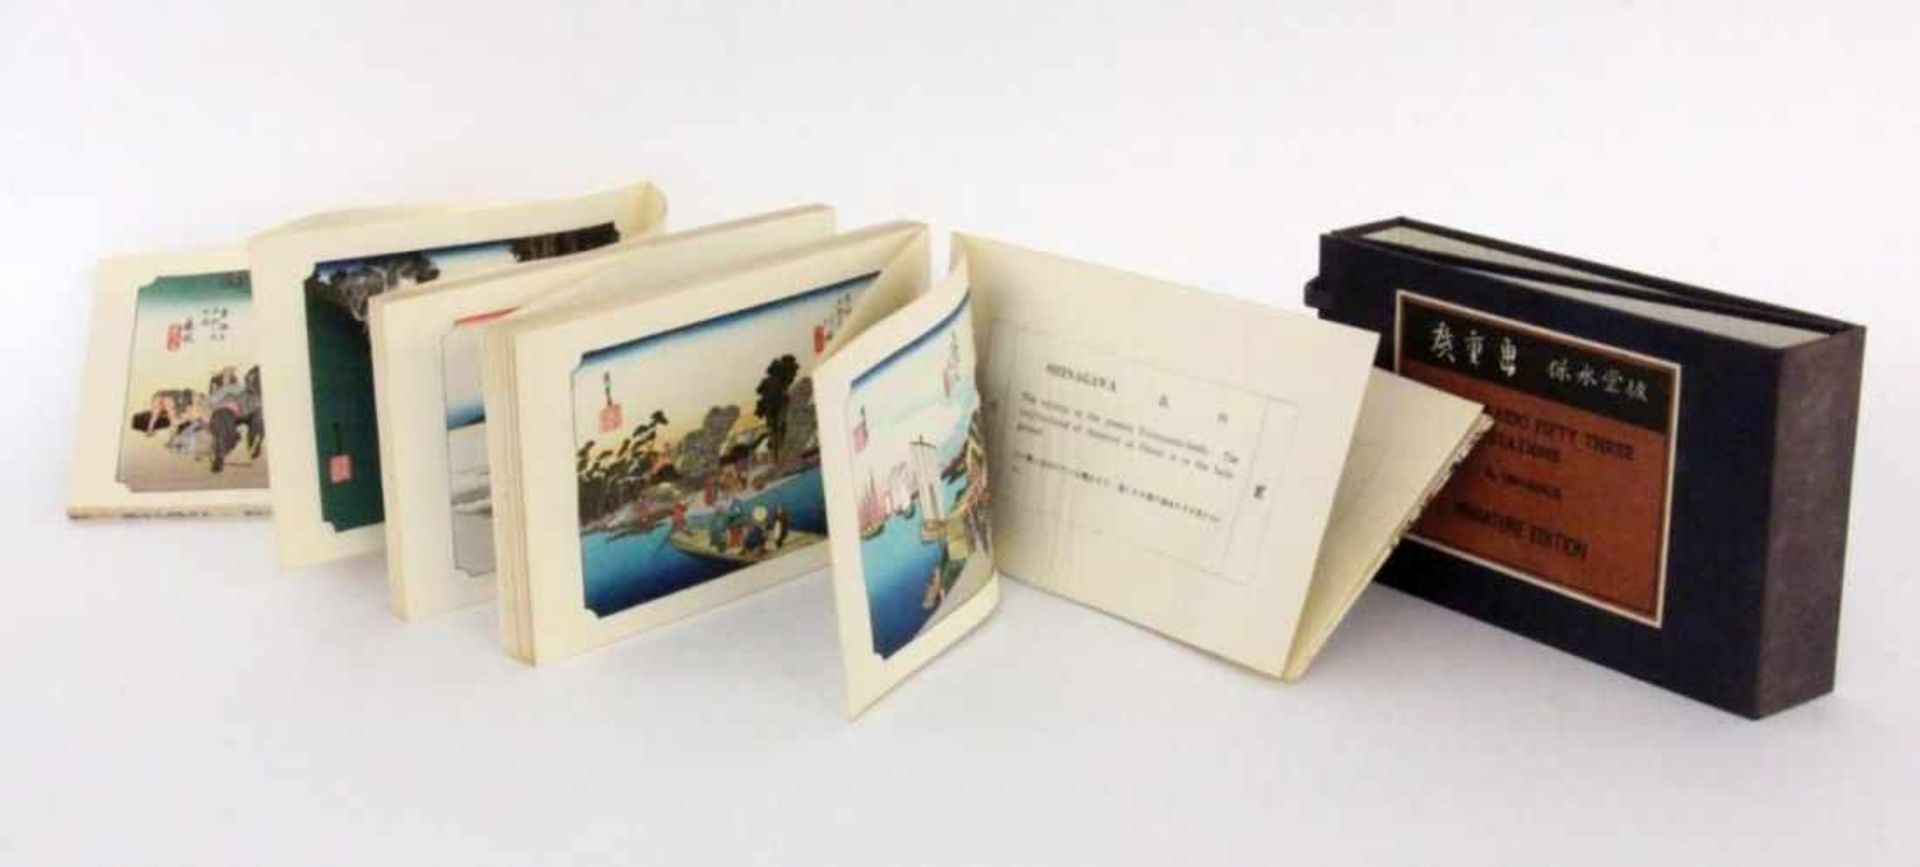 HIROSHIGE circa 1950 ''The Tokaido Fifty Three Stations'' Miniature edition. Handwrittendedication